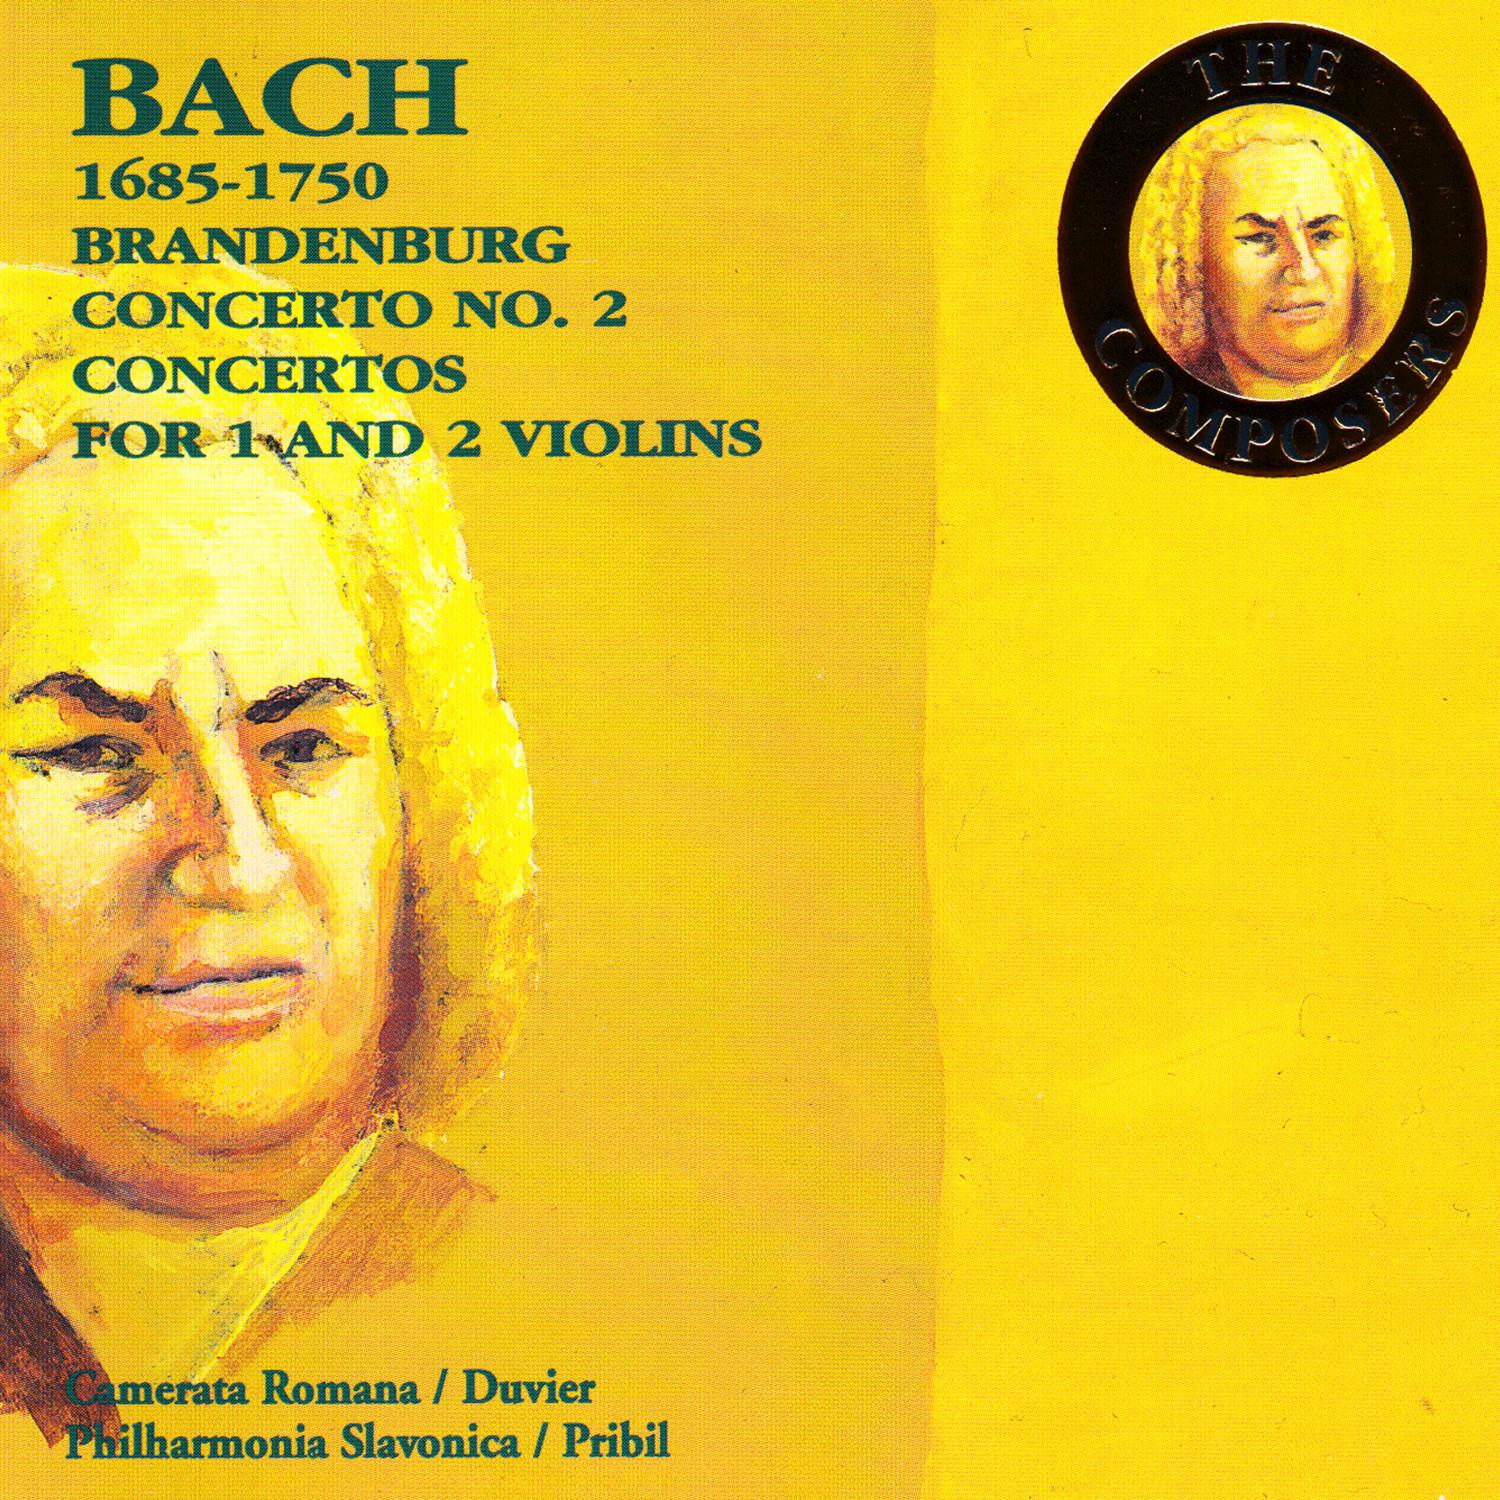 Bach: Brandenburg Concerto No. 2, Concertos for 1 and 2 Violins